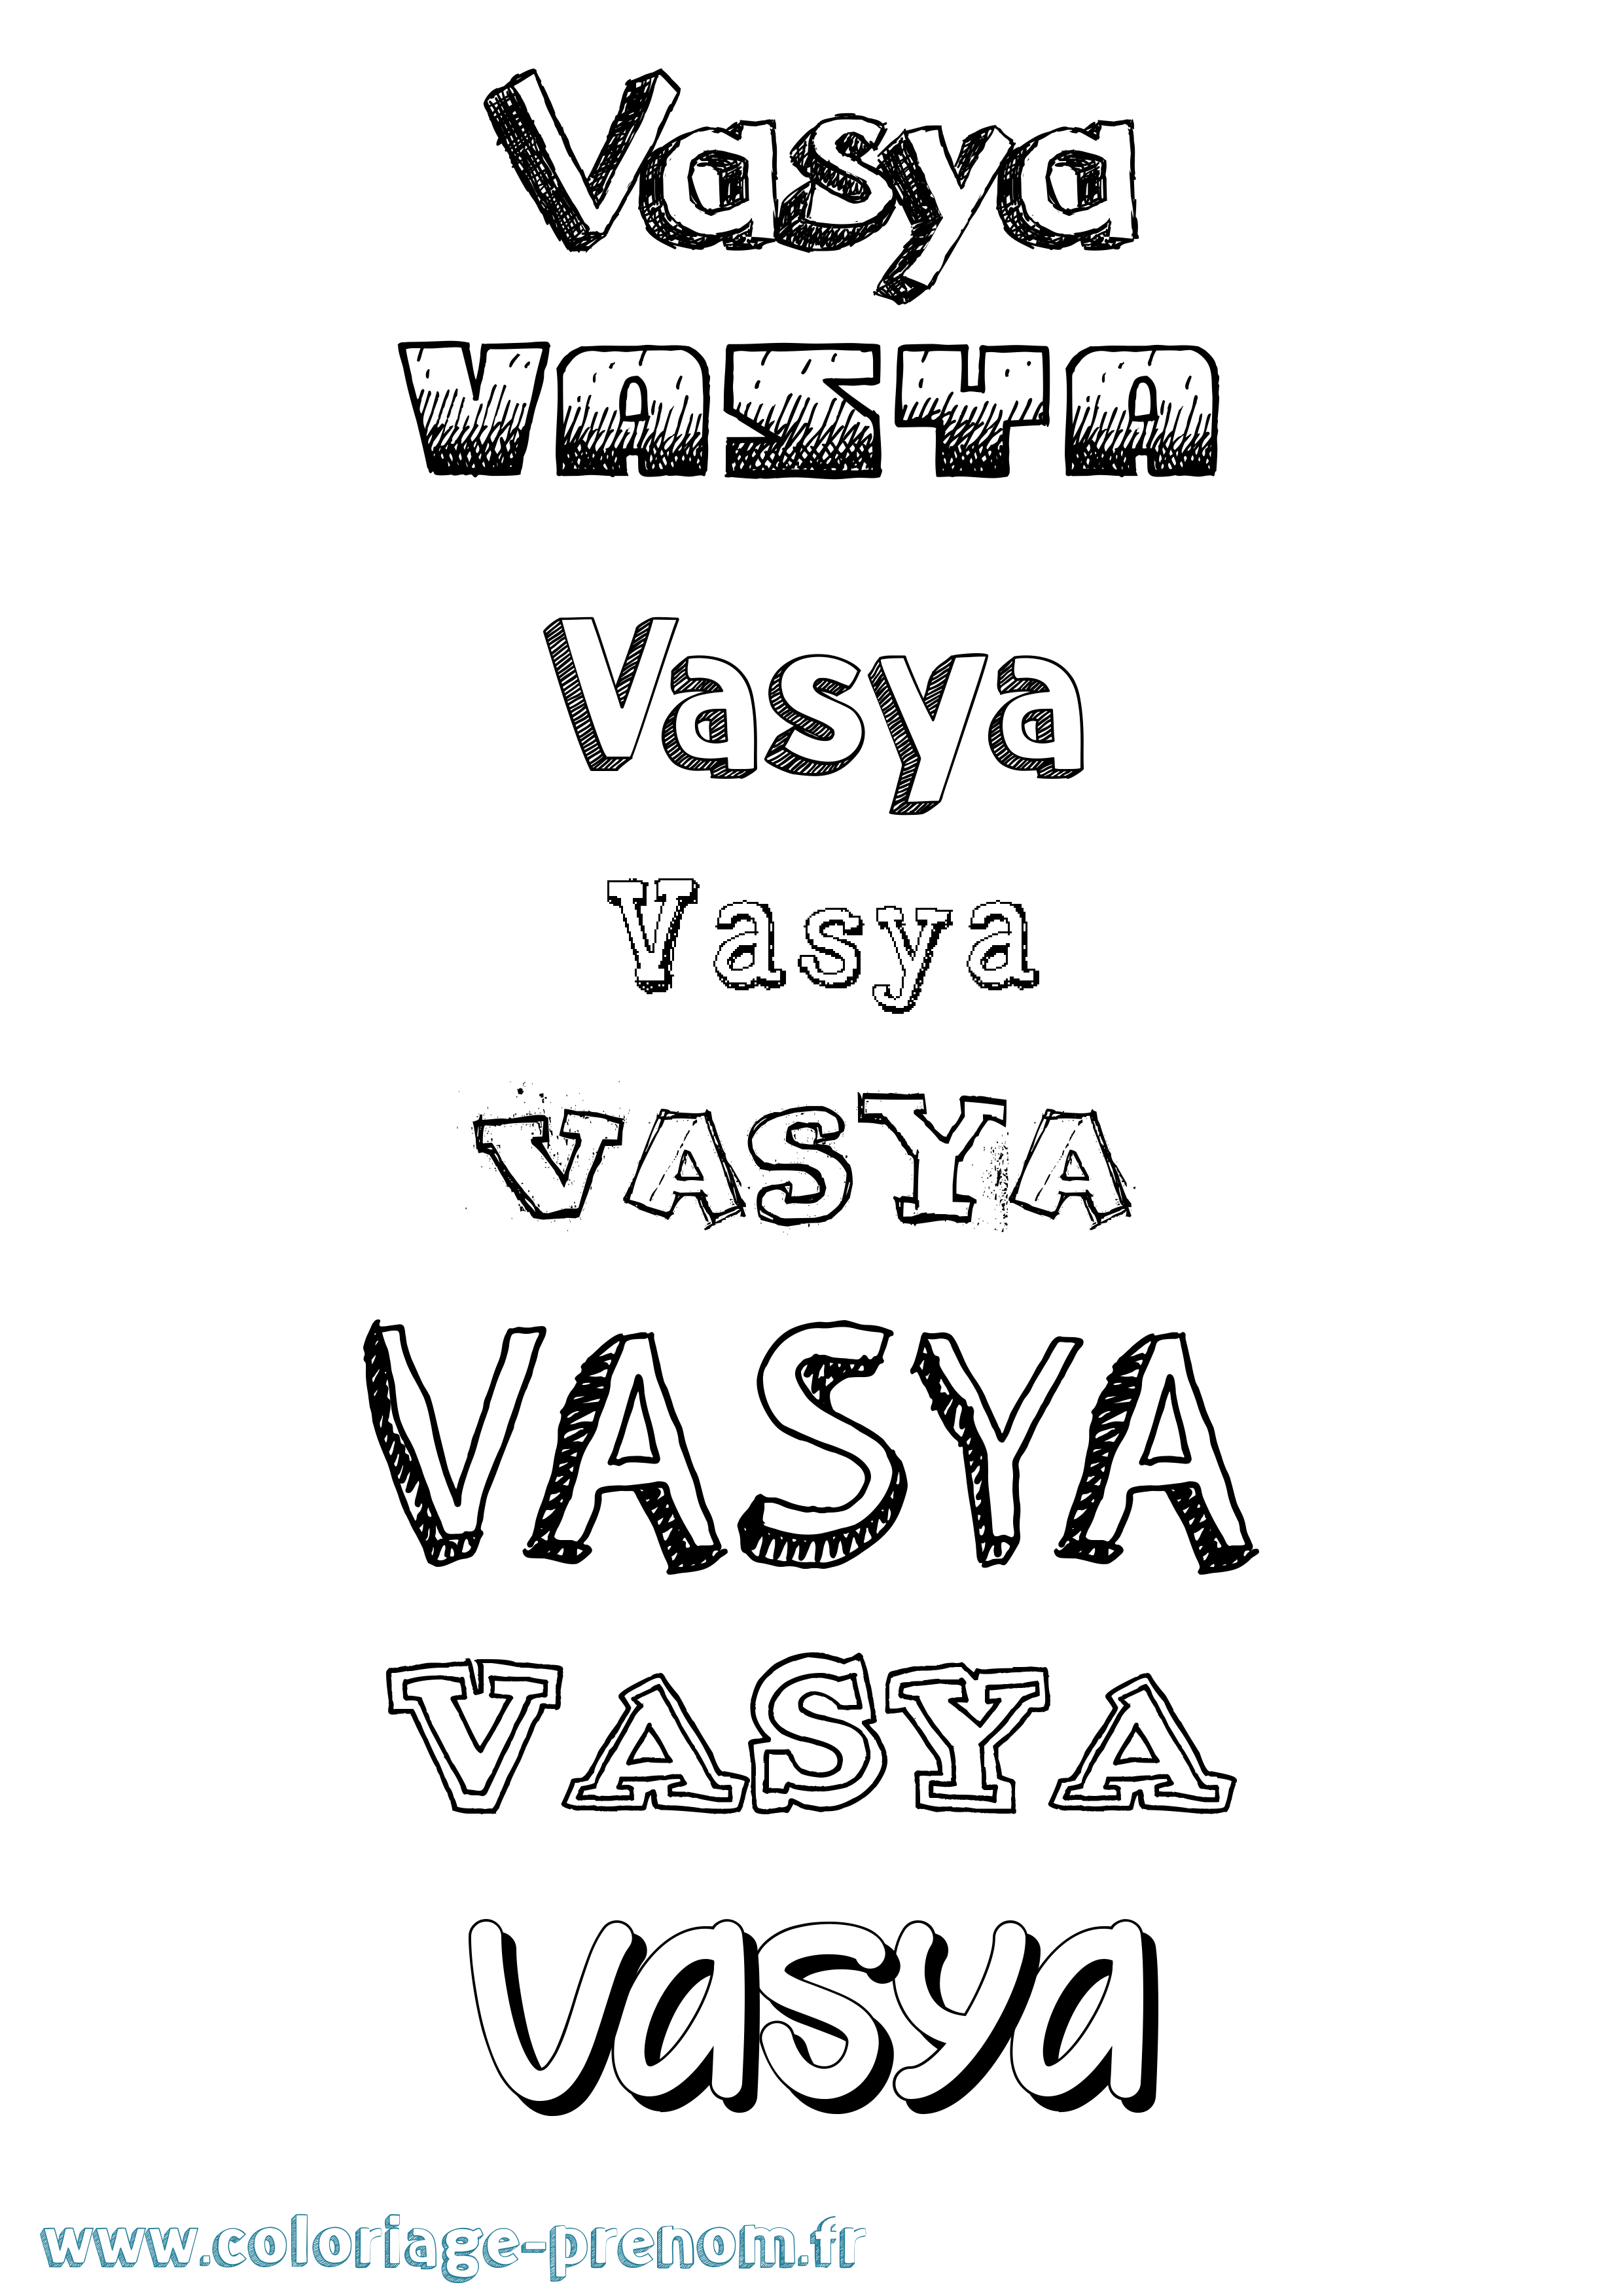 Coloriage prénom Vasya Dessiné